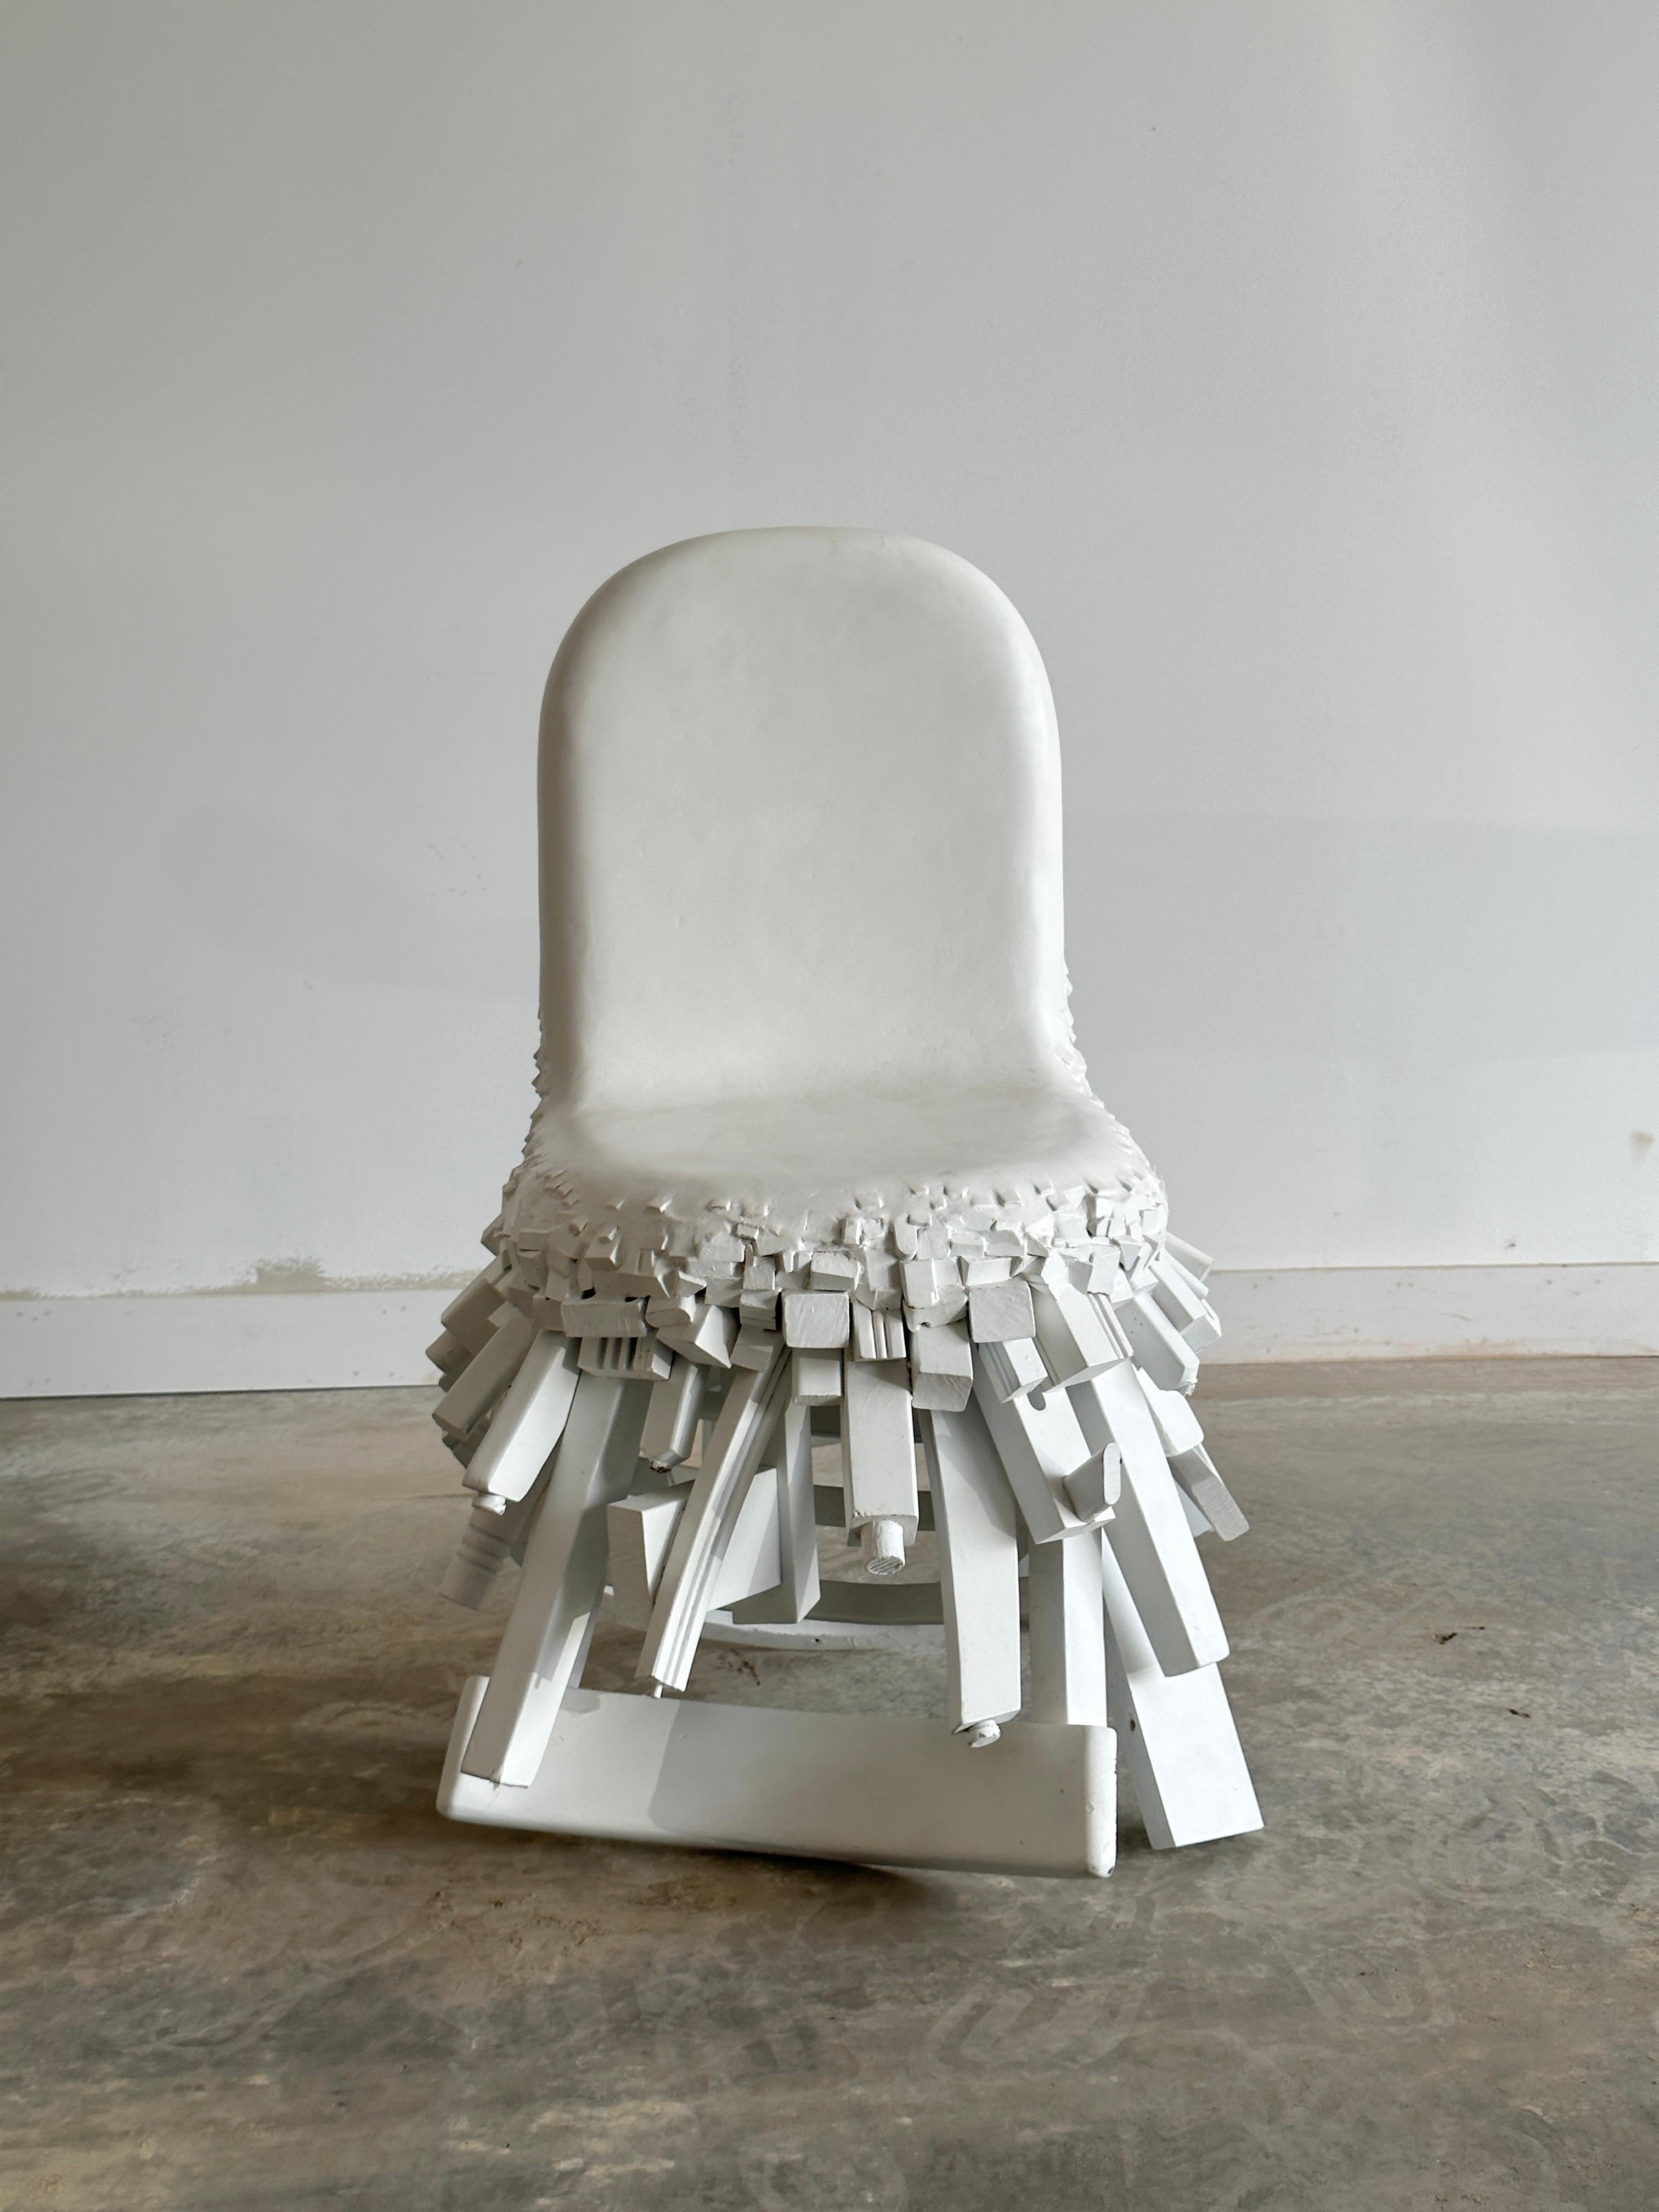 conceptual furniture